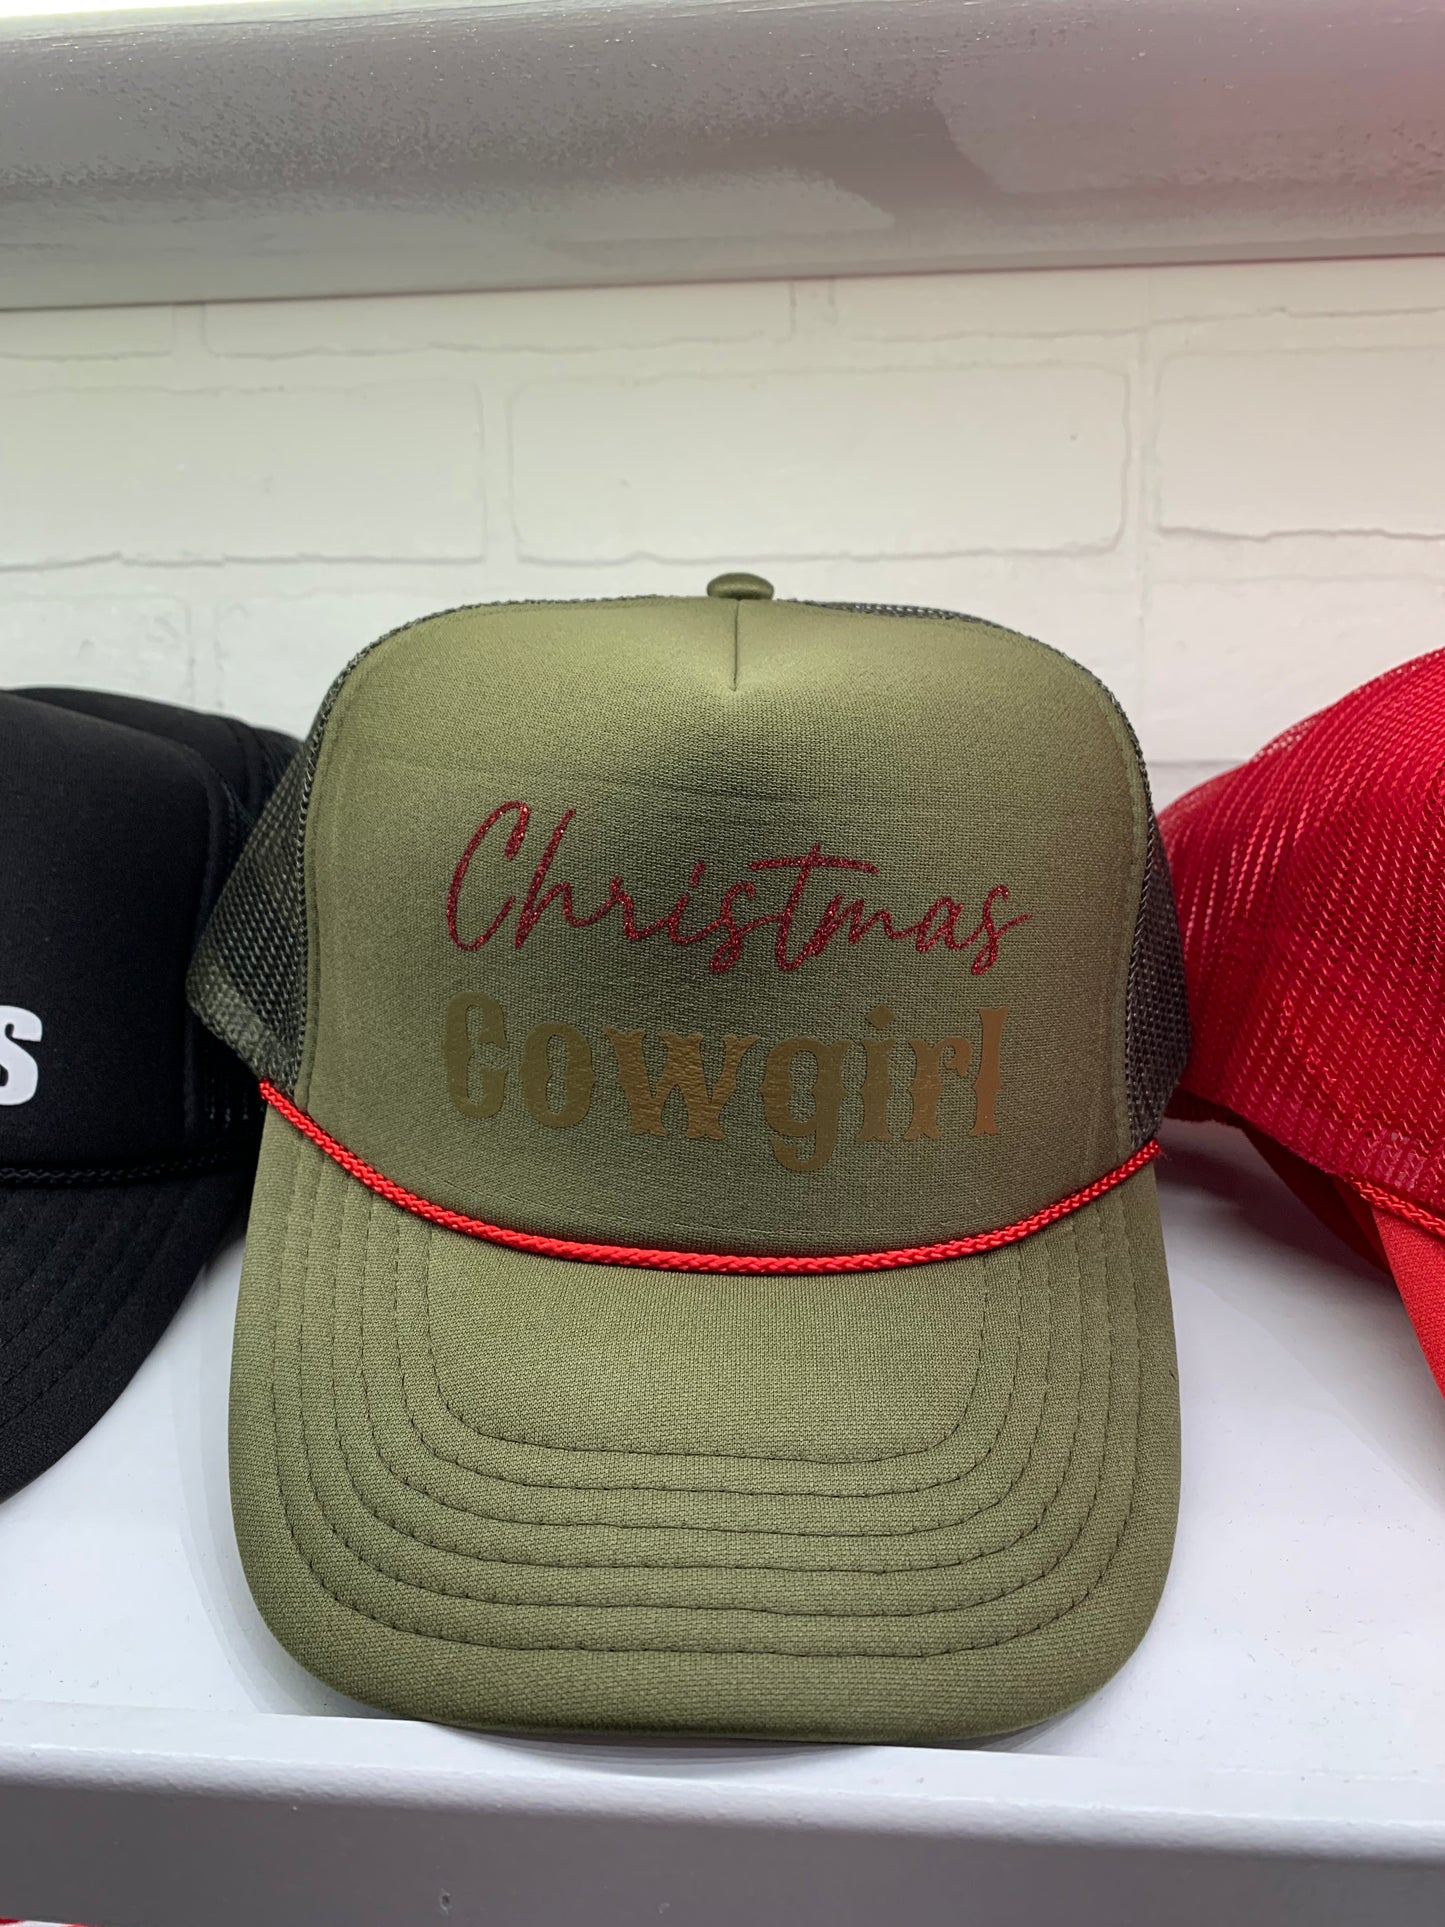 Christmas Trucker Hats